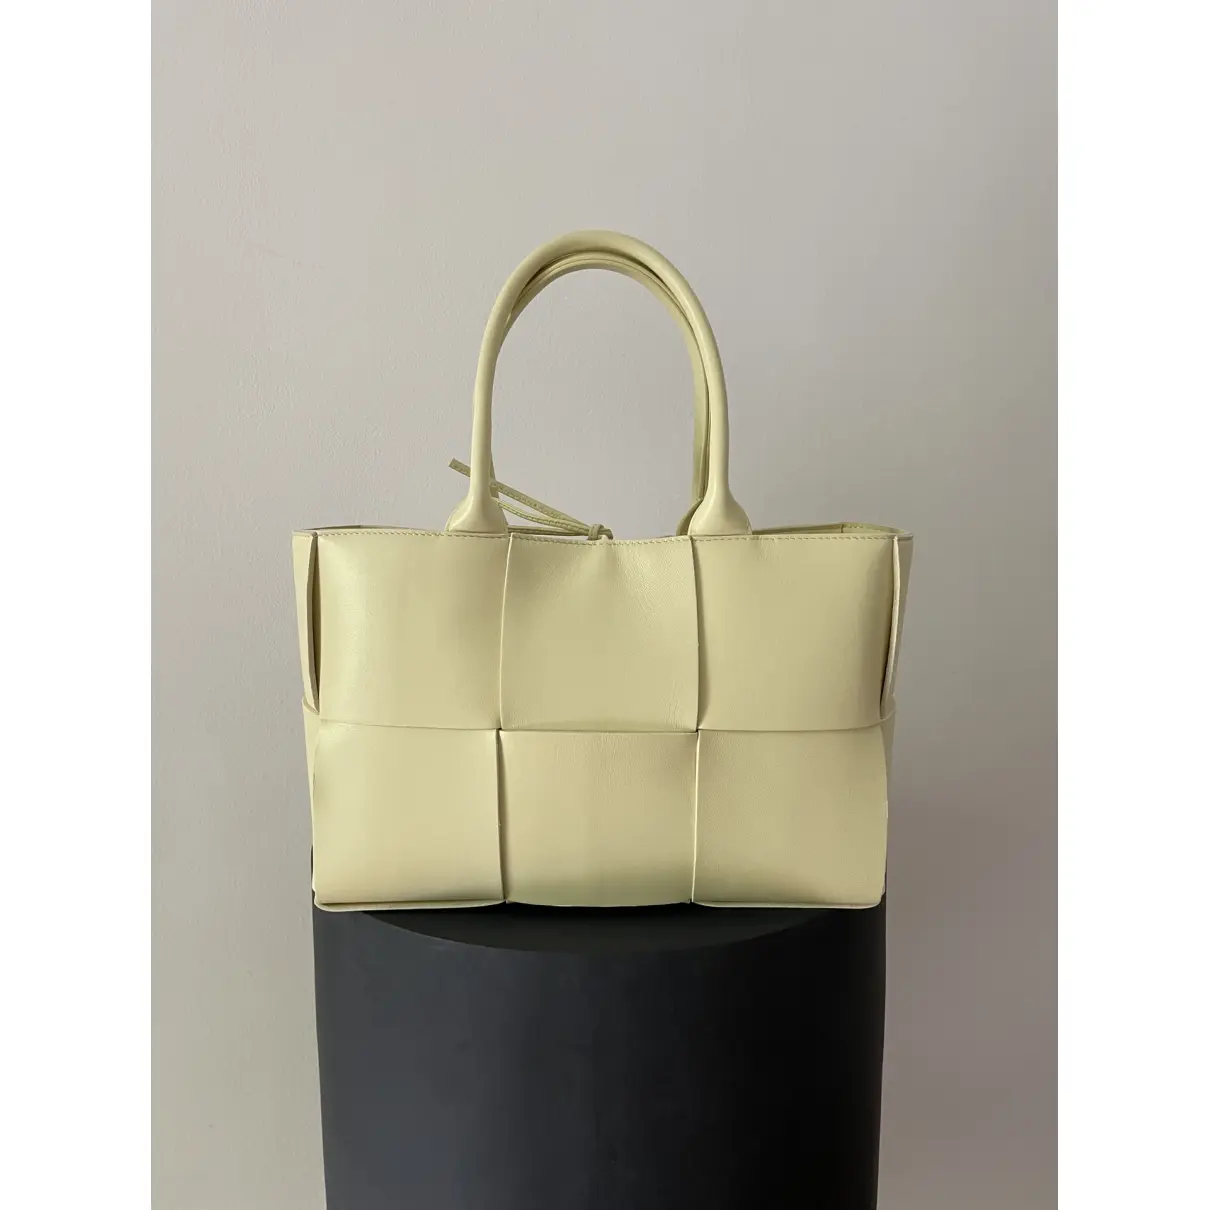 Buy Bottega Veneta Arco leather tote online